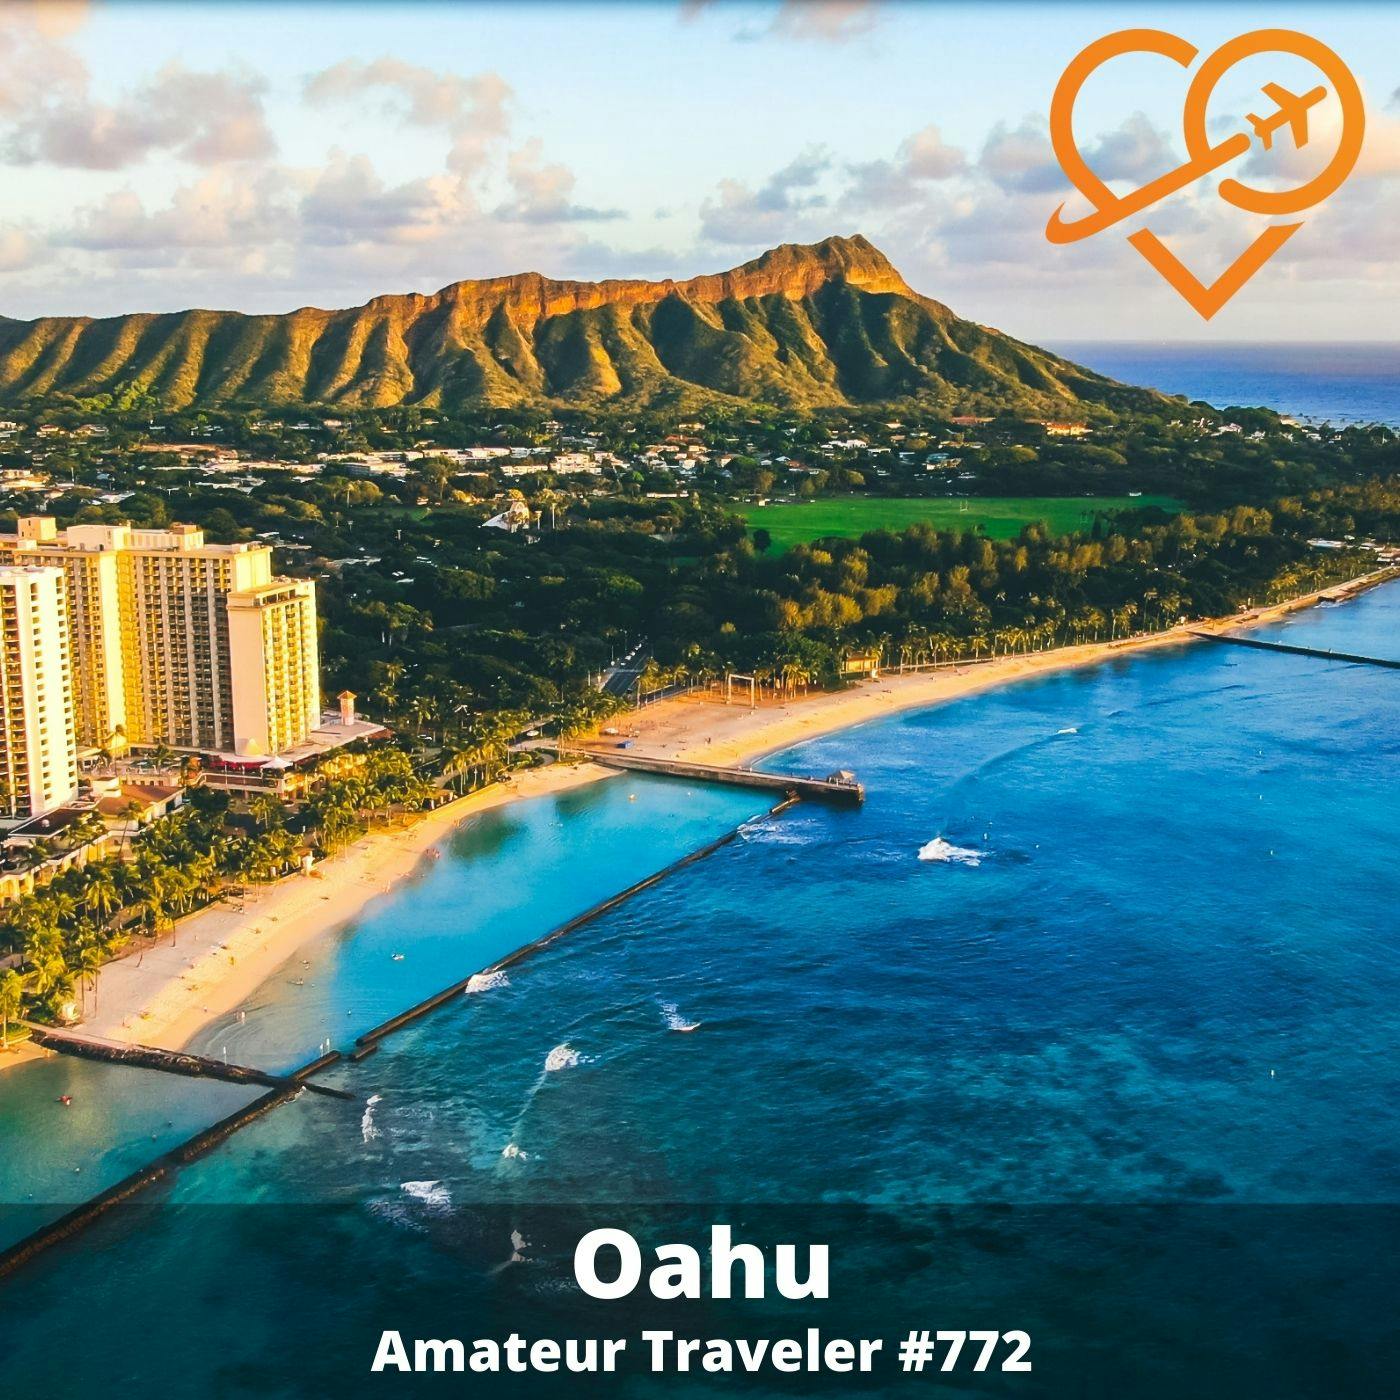 AT$772 - Travel to Oahu, Hawaii